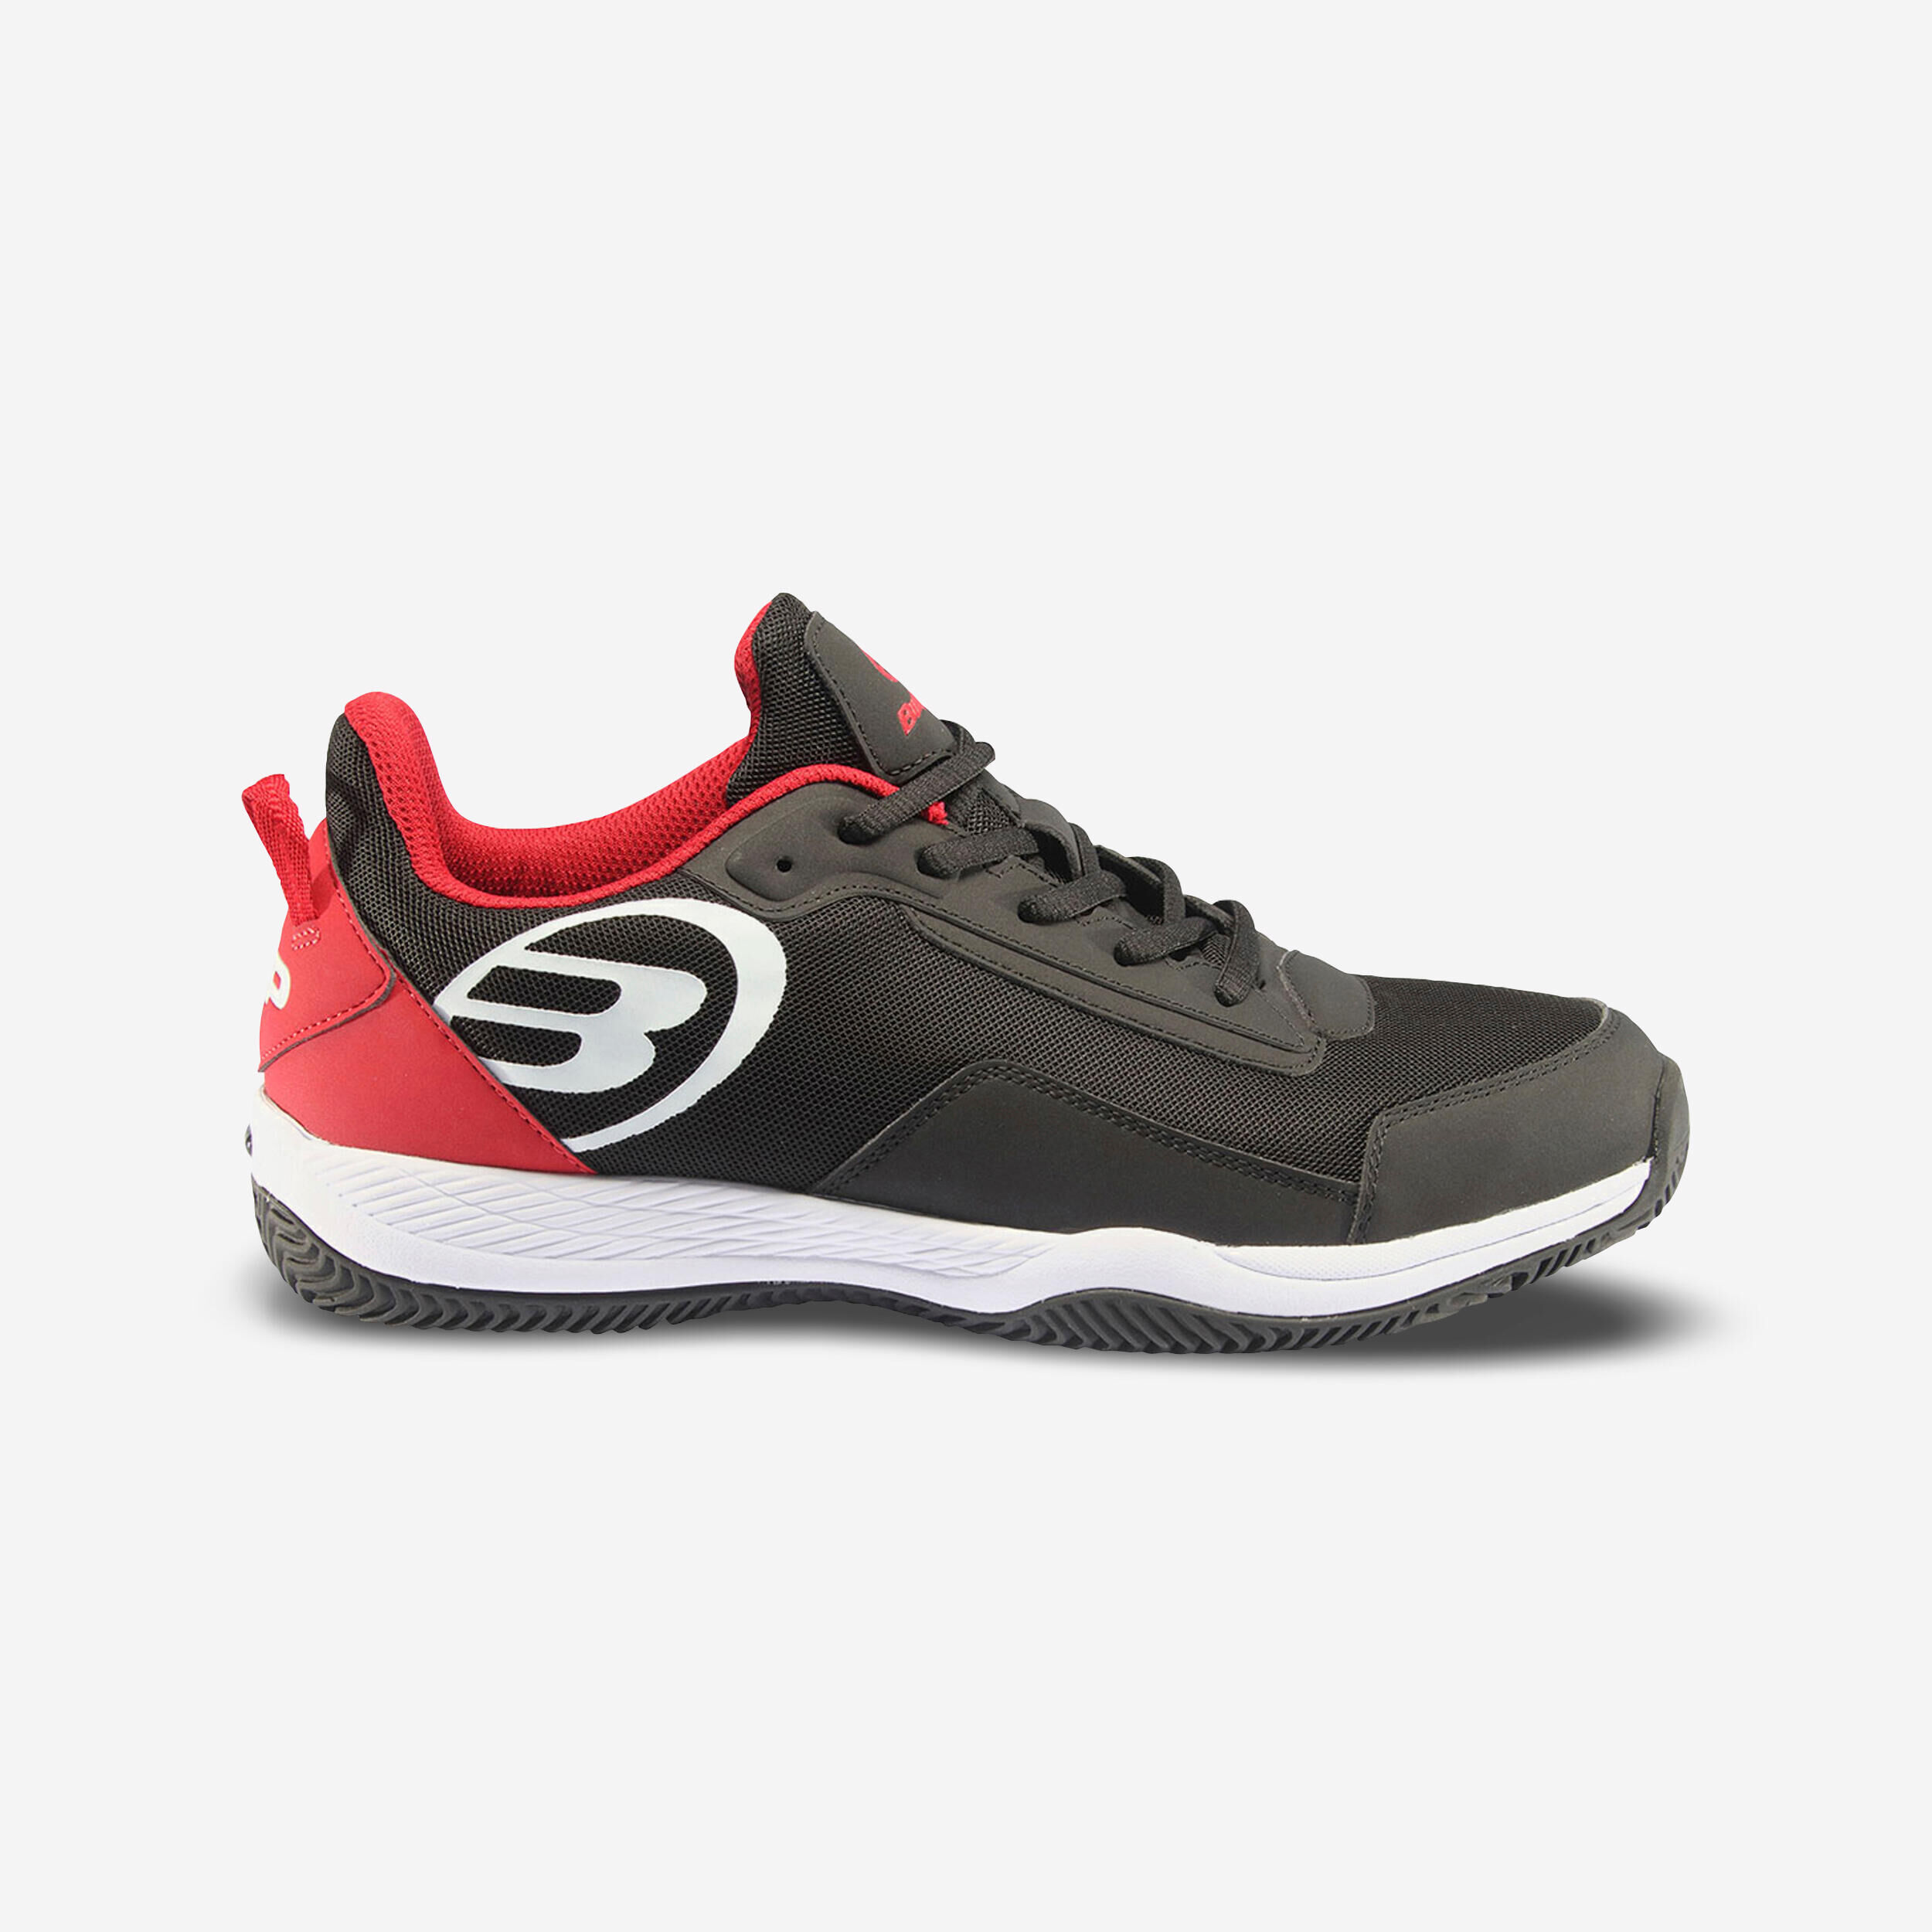 BULLPADEL Men's Padel Shoes Bowi 23 - Black/Red